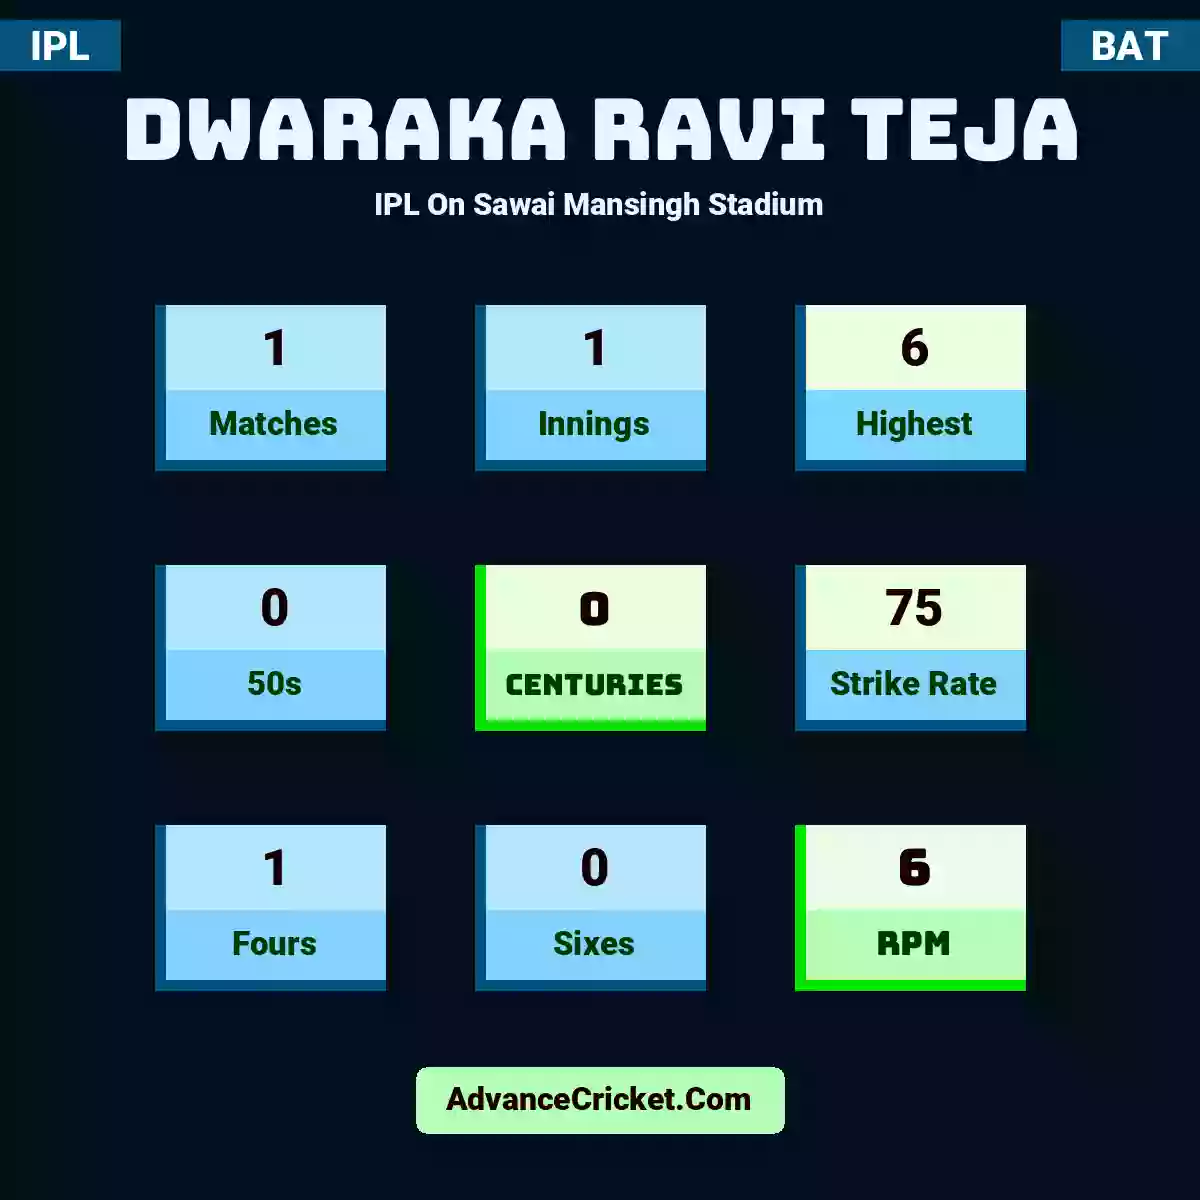 Dwaraka Ravi Teja IPL  On Sawai Mansingh Stadium, Dwaraka Ravi Teja played 1 matches, scored 6 runs as highest, 0 half-centuries, and 0 centuries, with a strike rate of 75. D.Teja hit 1 fours and 0 sixes, with an RPM of 6.